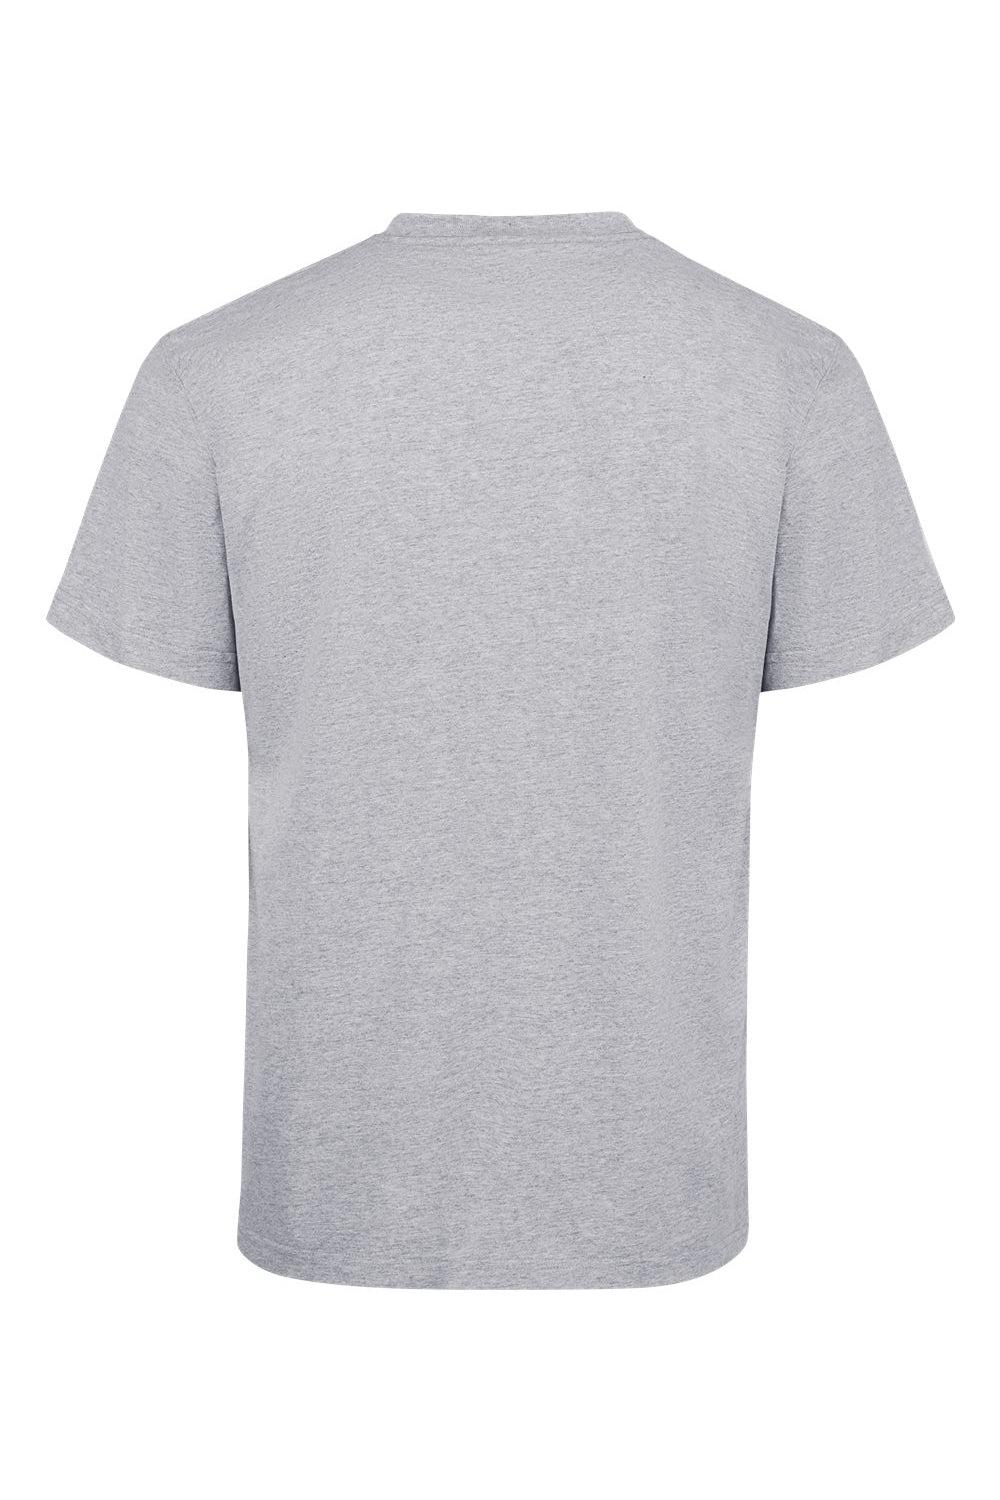 Dickies WS50-D Mens Traditional Short Sleeve Crewneck T-Shirt w/ Pocket Heather Grey Flat Back